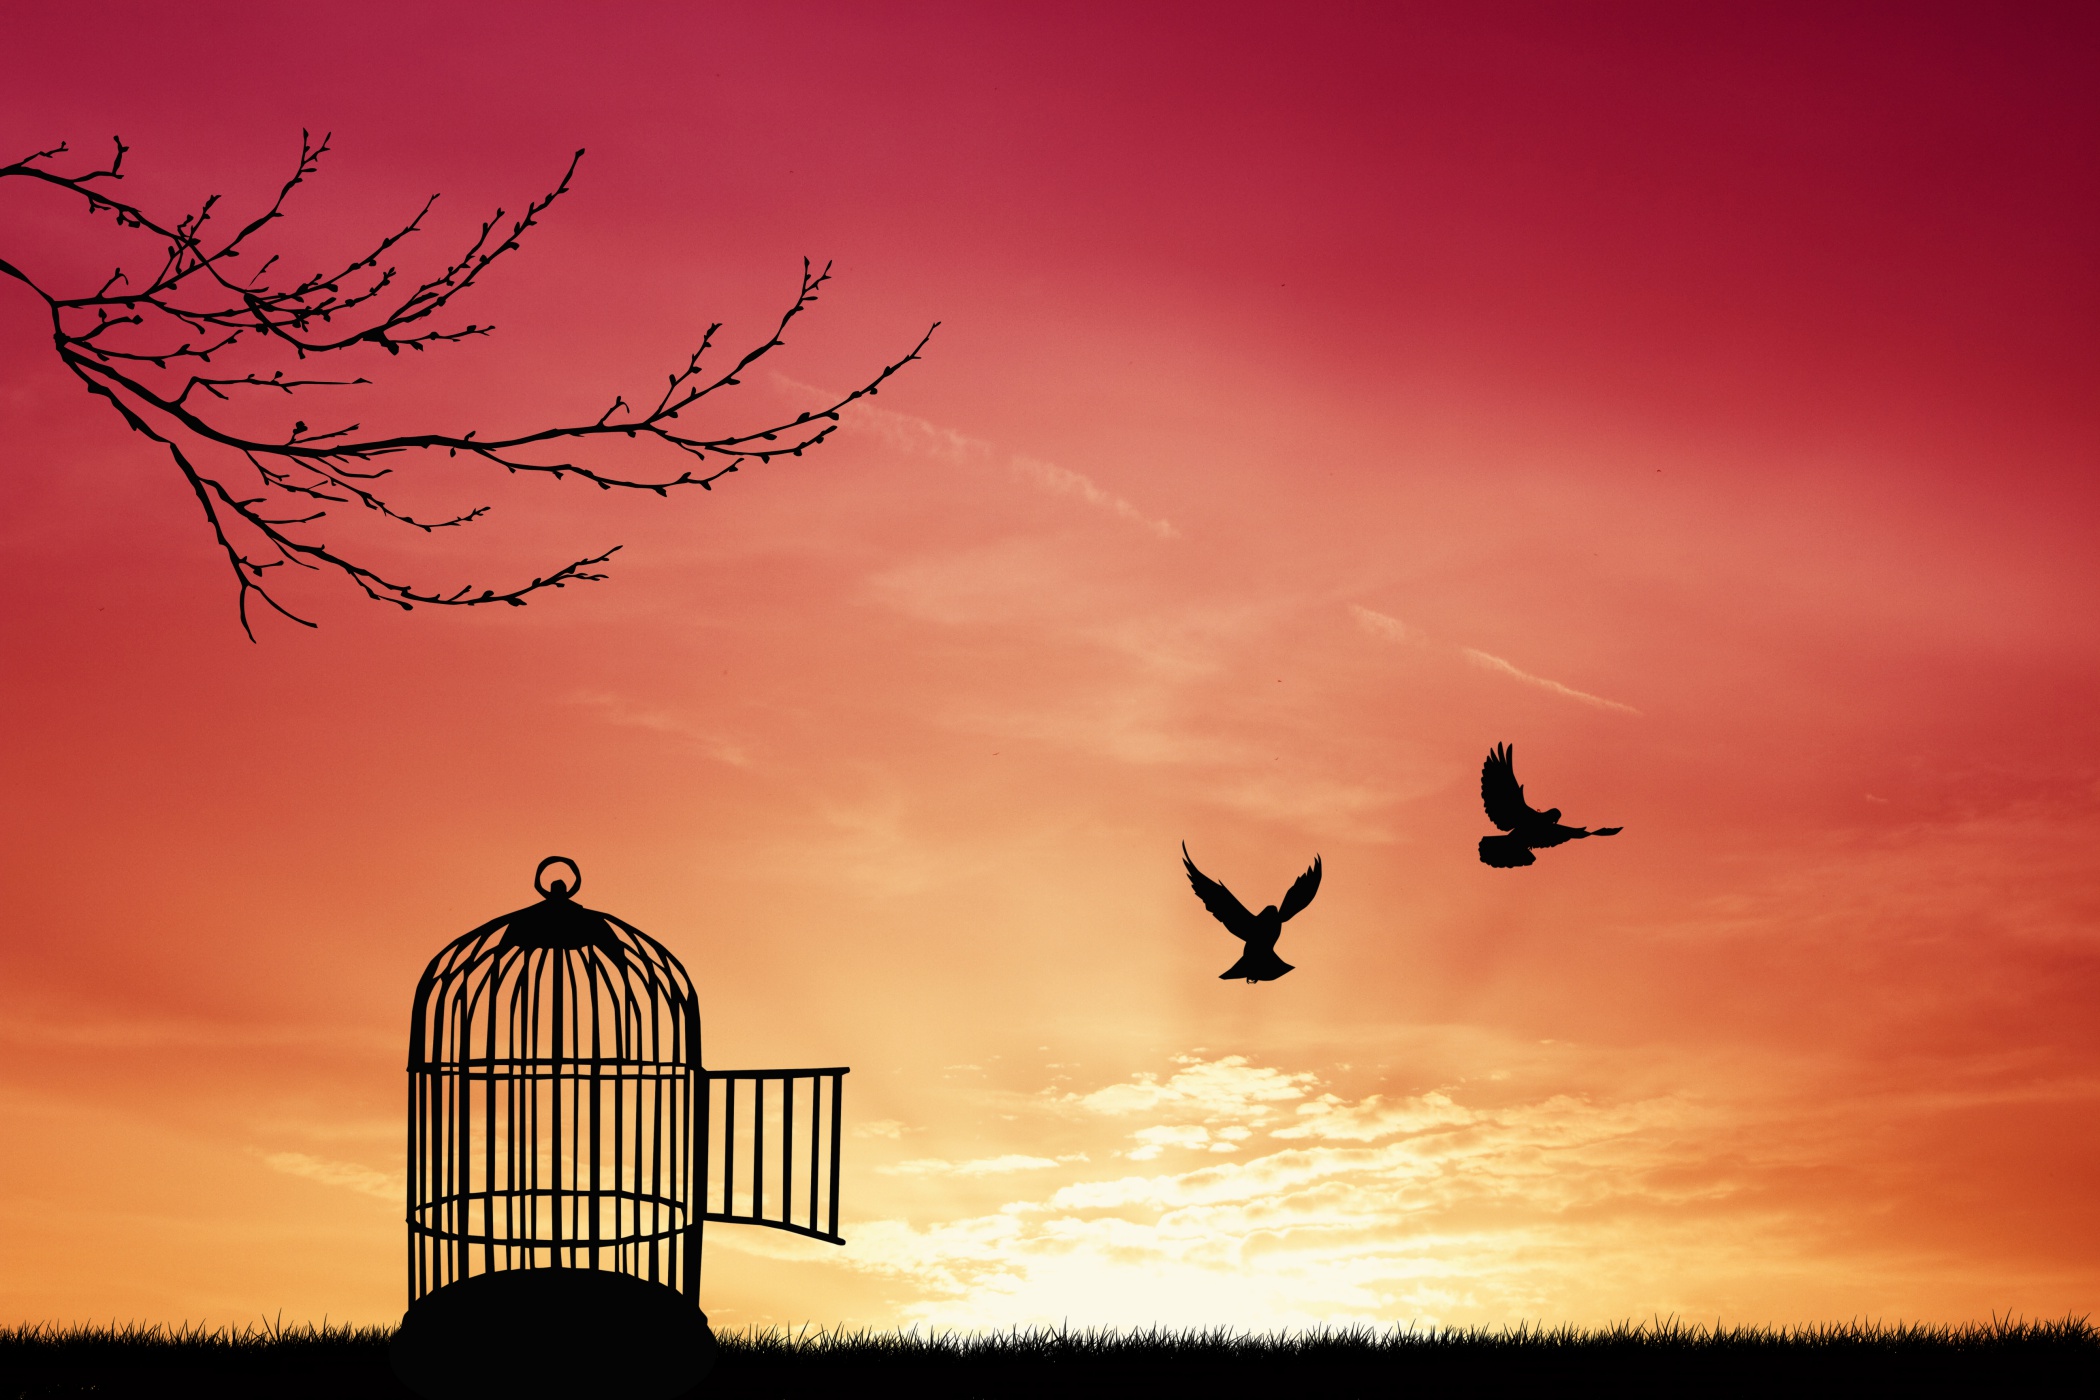 Bird cage silhouette